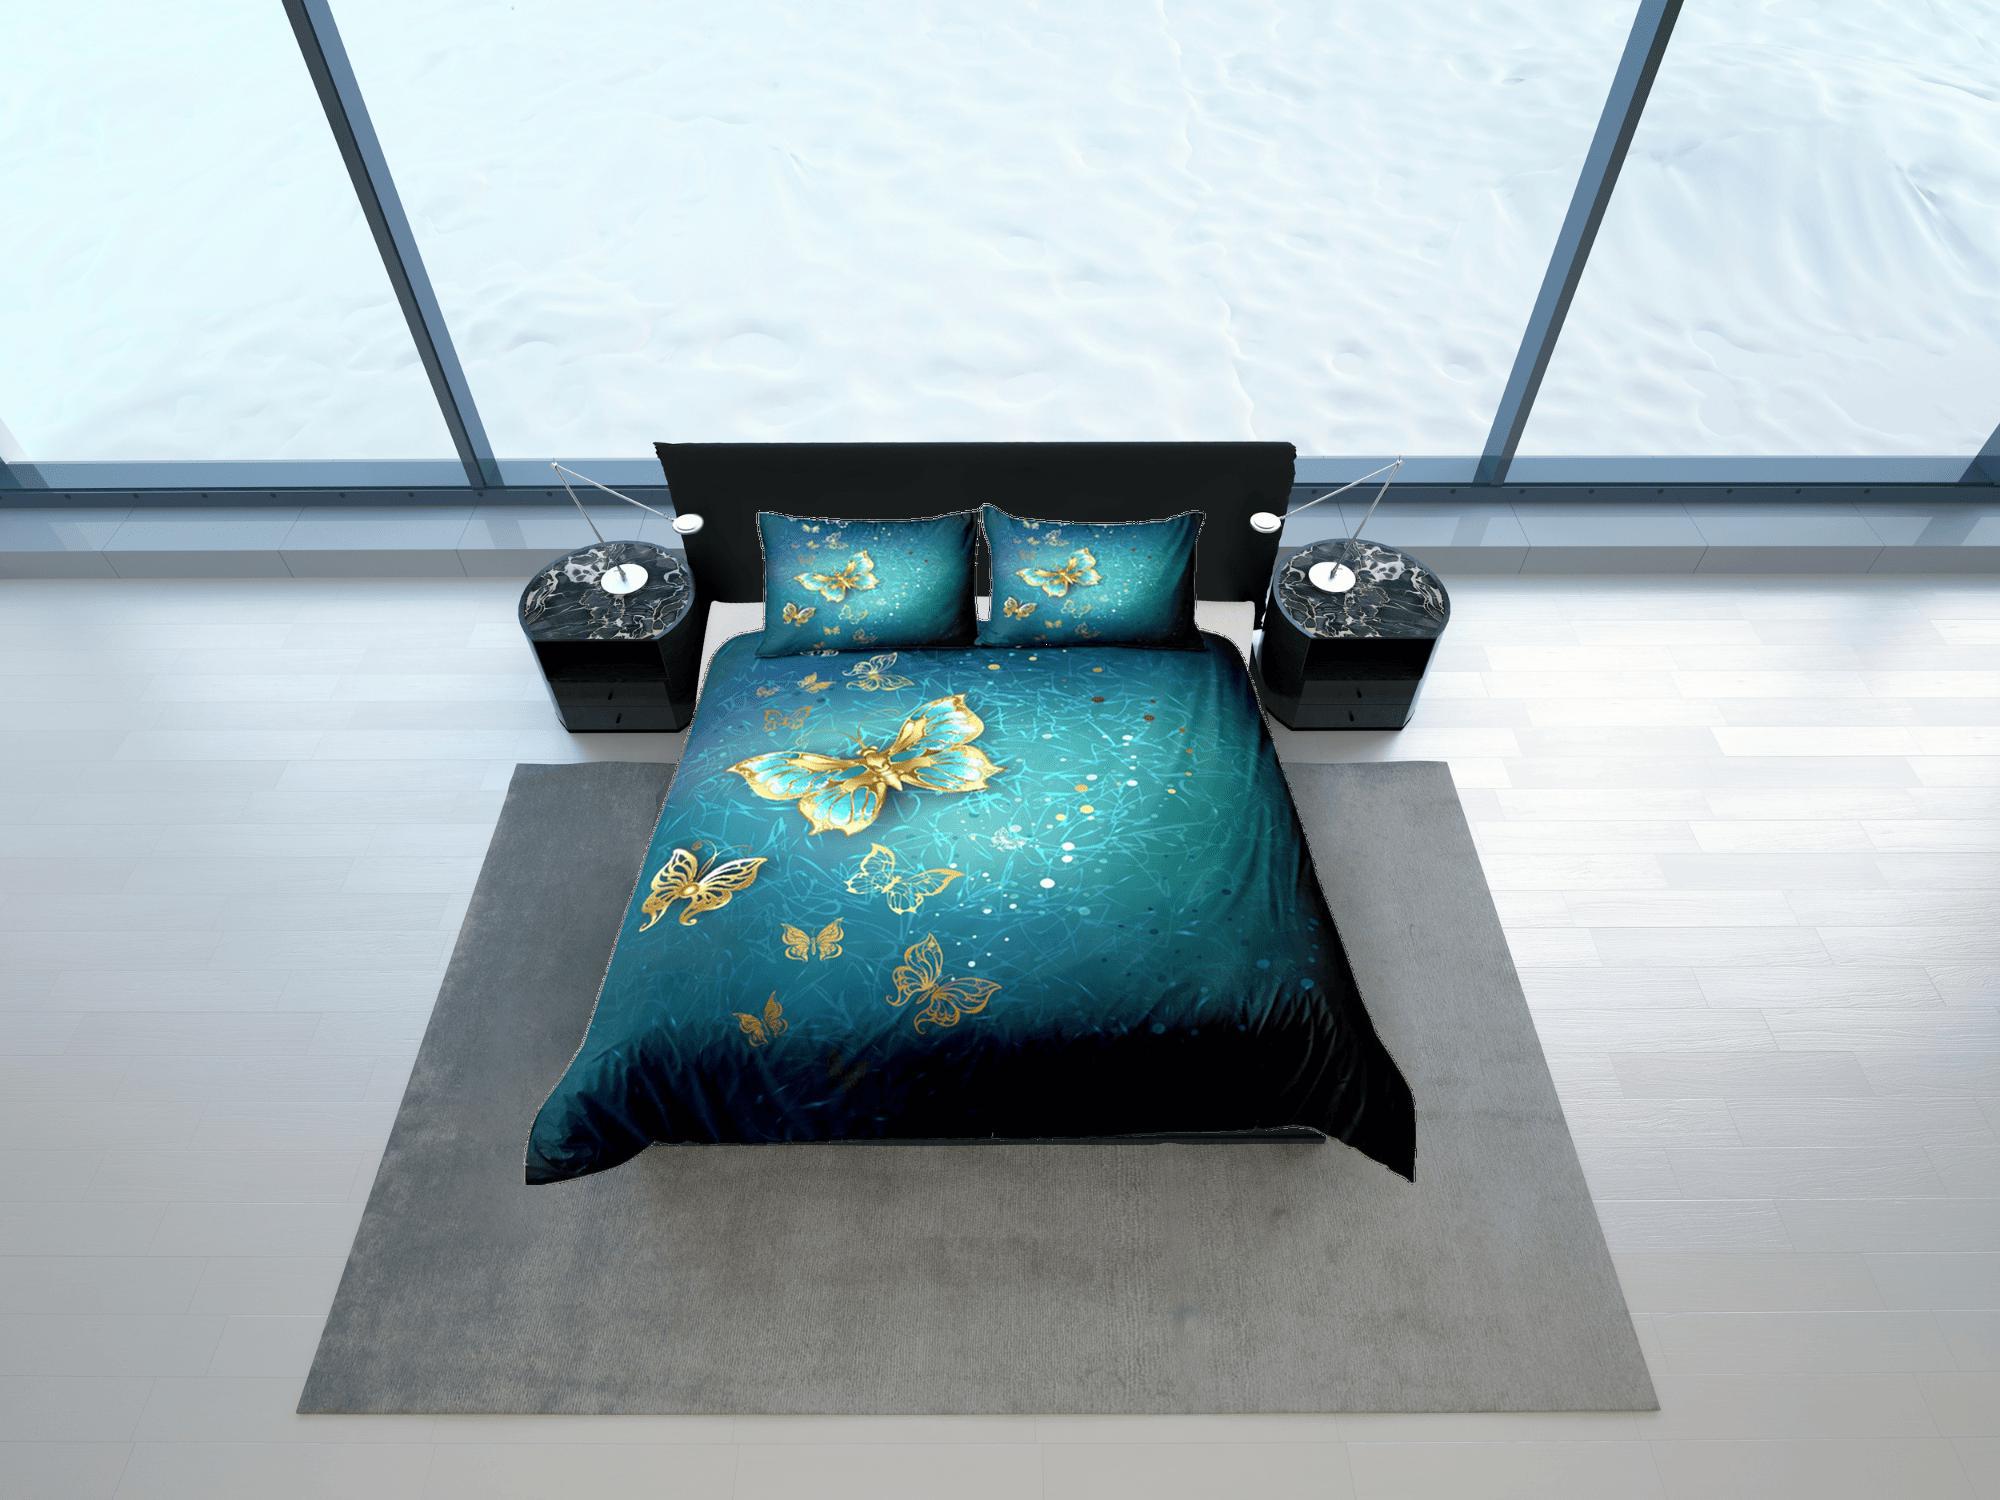 daintyduvet Butterfly Duvet Cover Set Green Bedspread, Dorm Bedding with Pillowcase